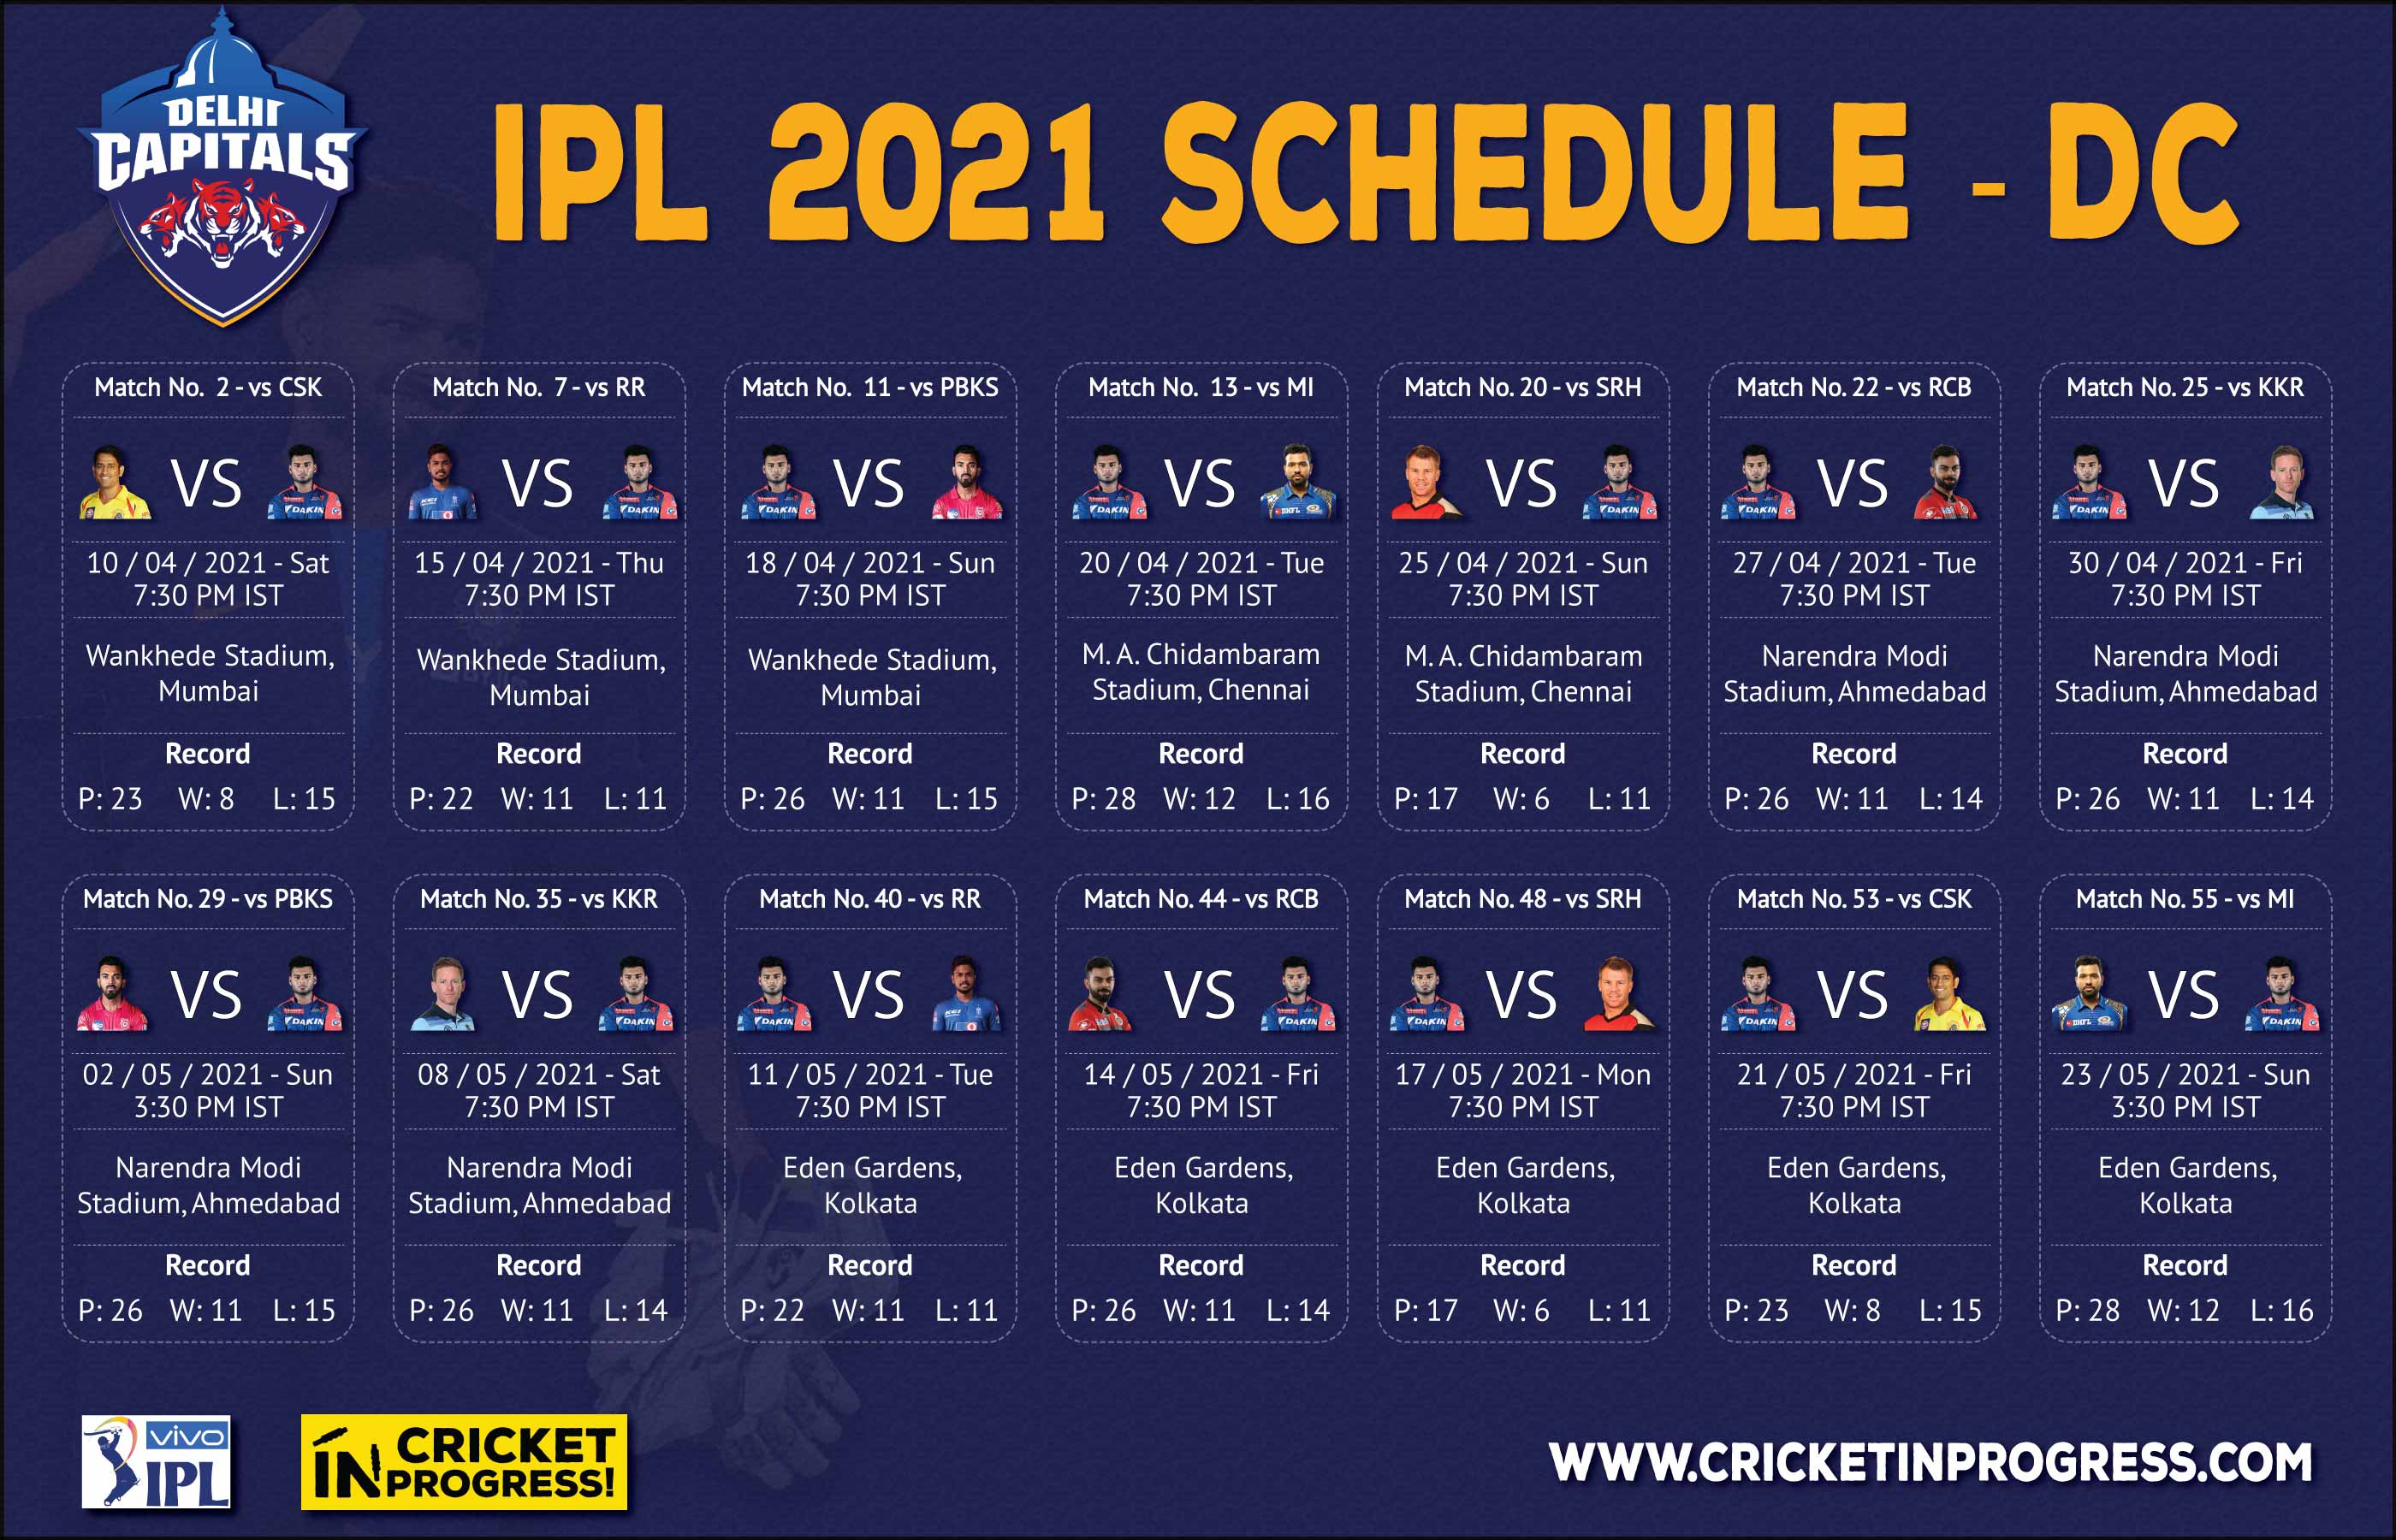 IPL 2021 DC Schedule